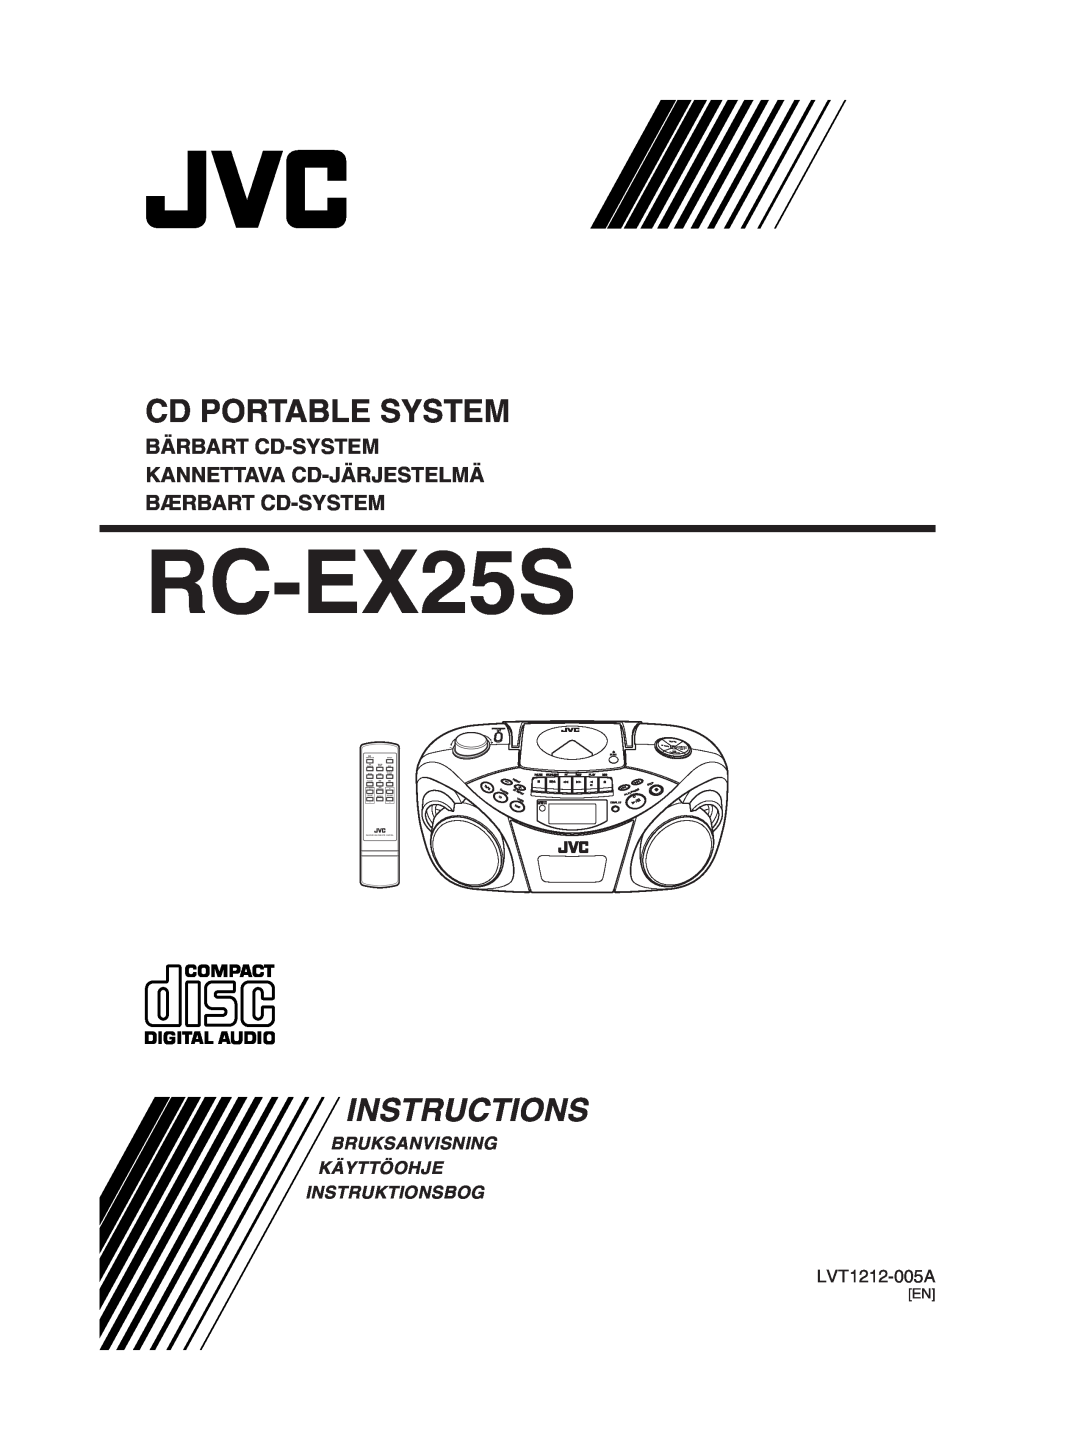 JVC RC-EX25S manual LVT1212-005A, Cd Portable System, Instructions, Bruksanvisning Käyttöohje Instruktionsbog, Tape 